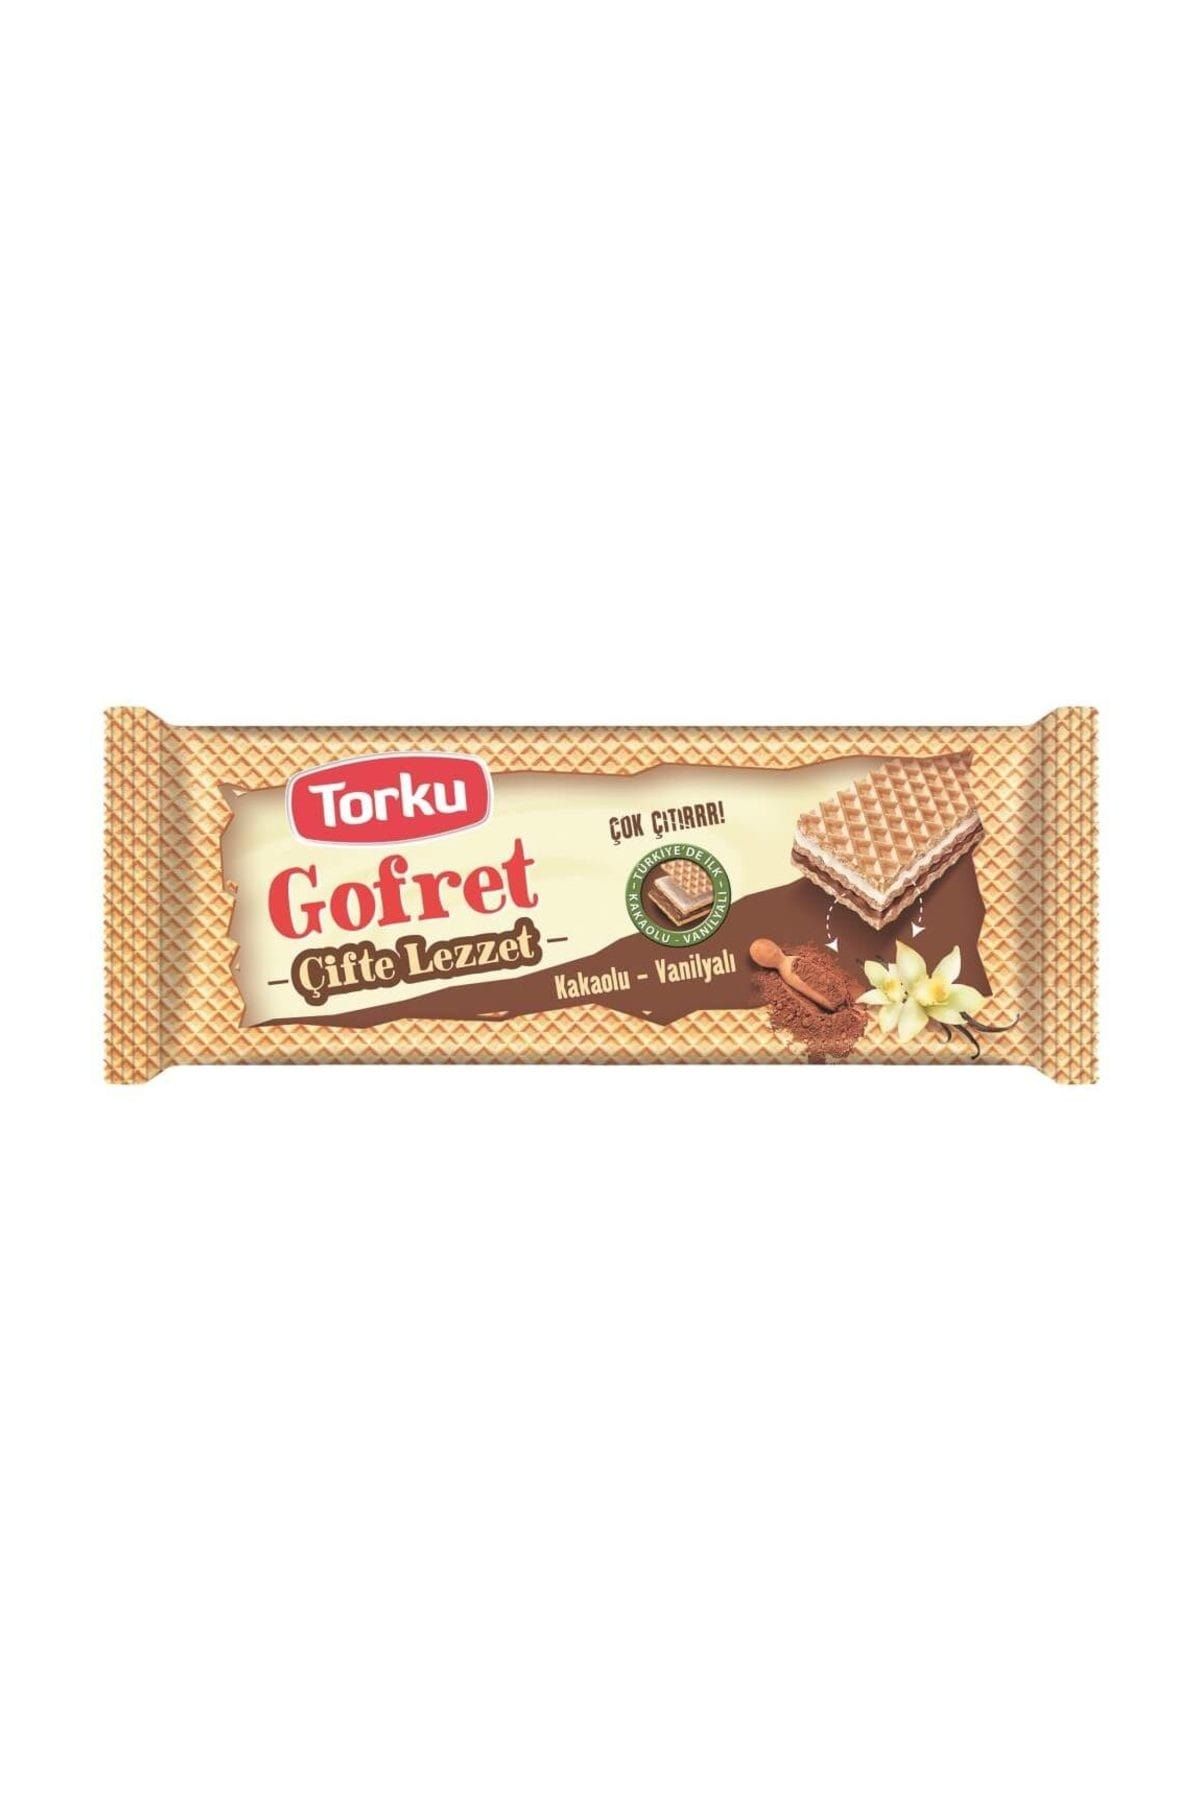 Torku Gofret Kakao-Sade Kremalı 142 Gr (19 Adet)